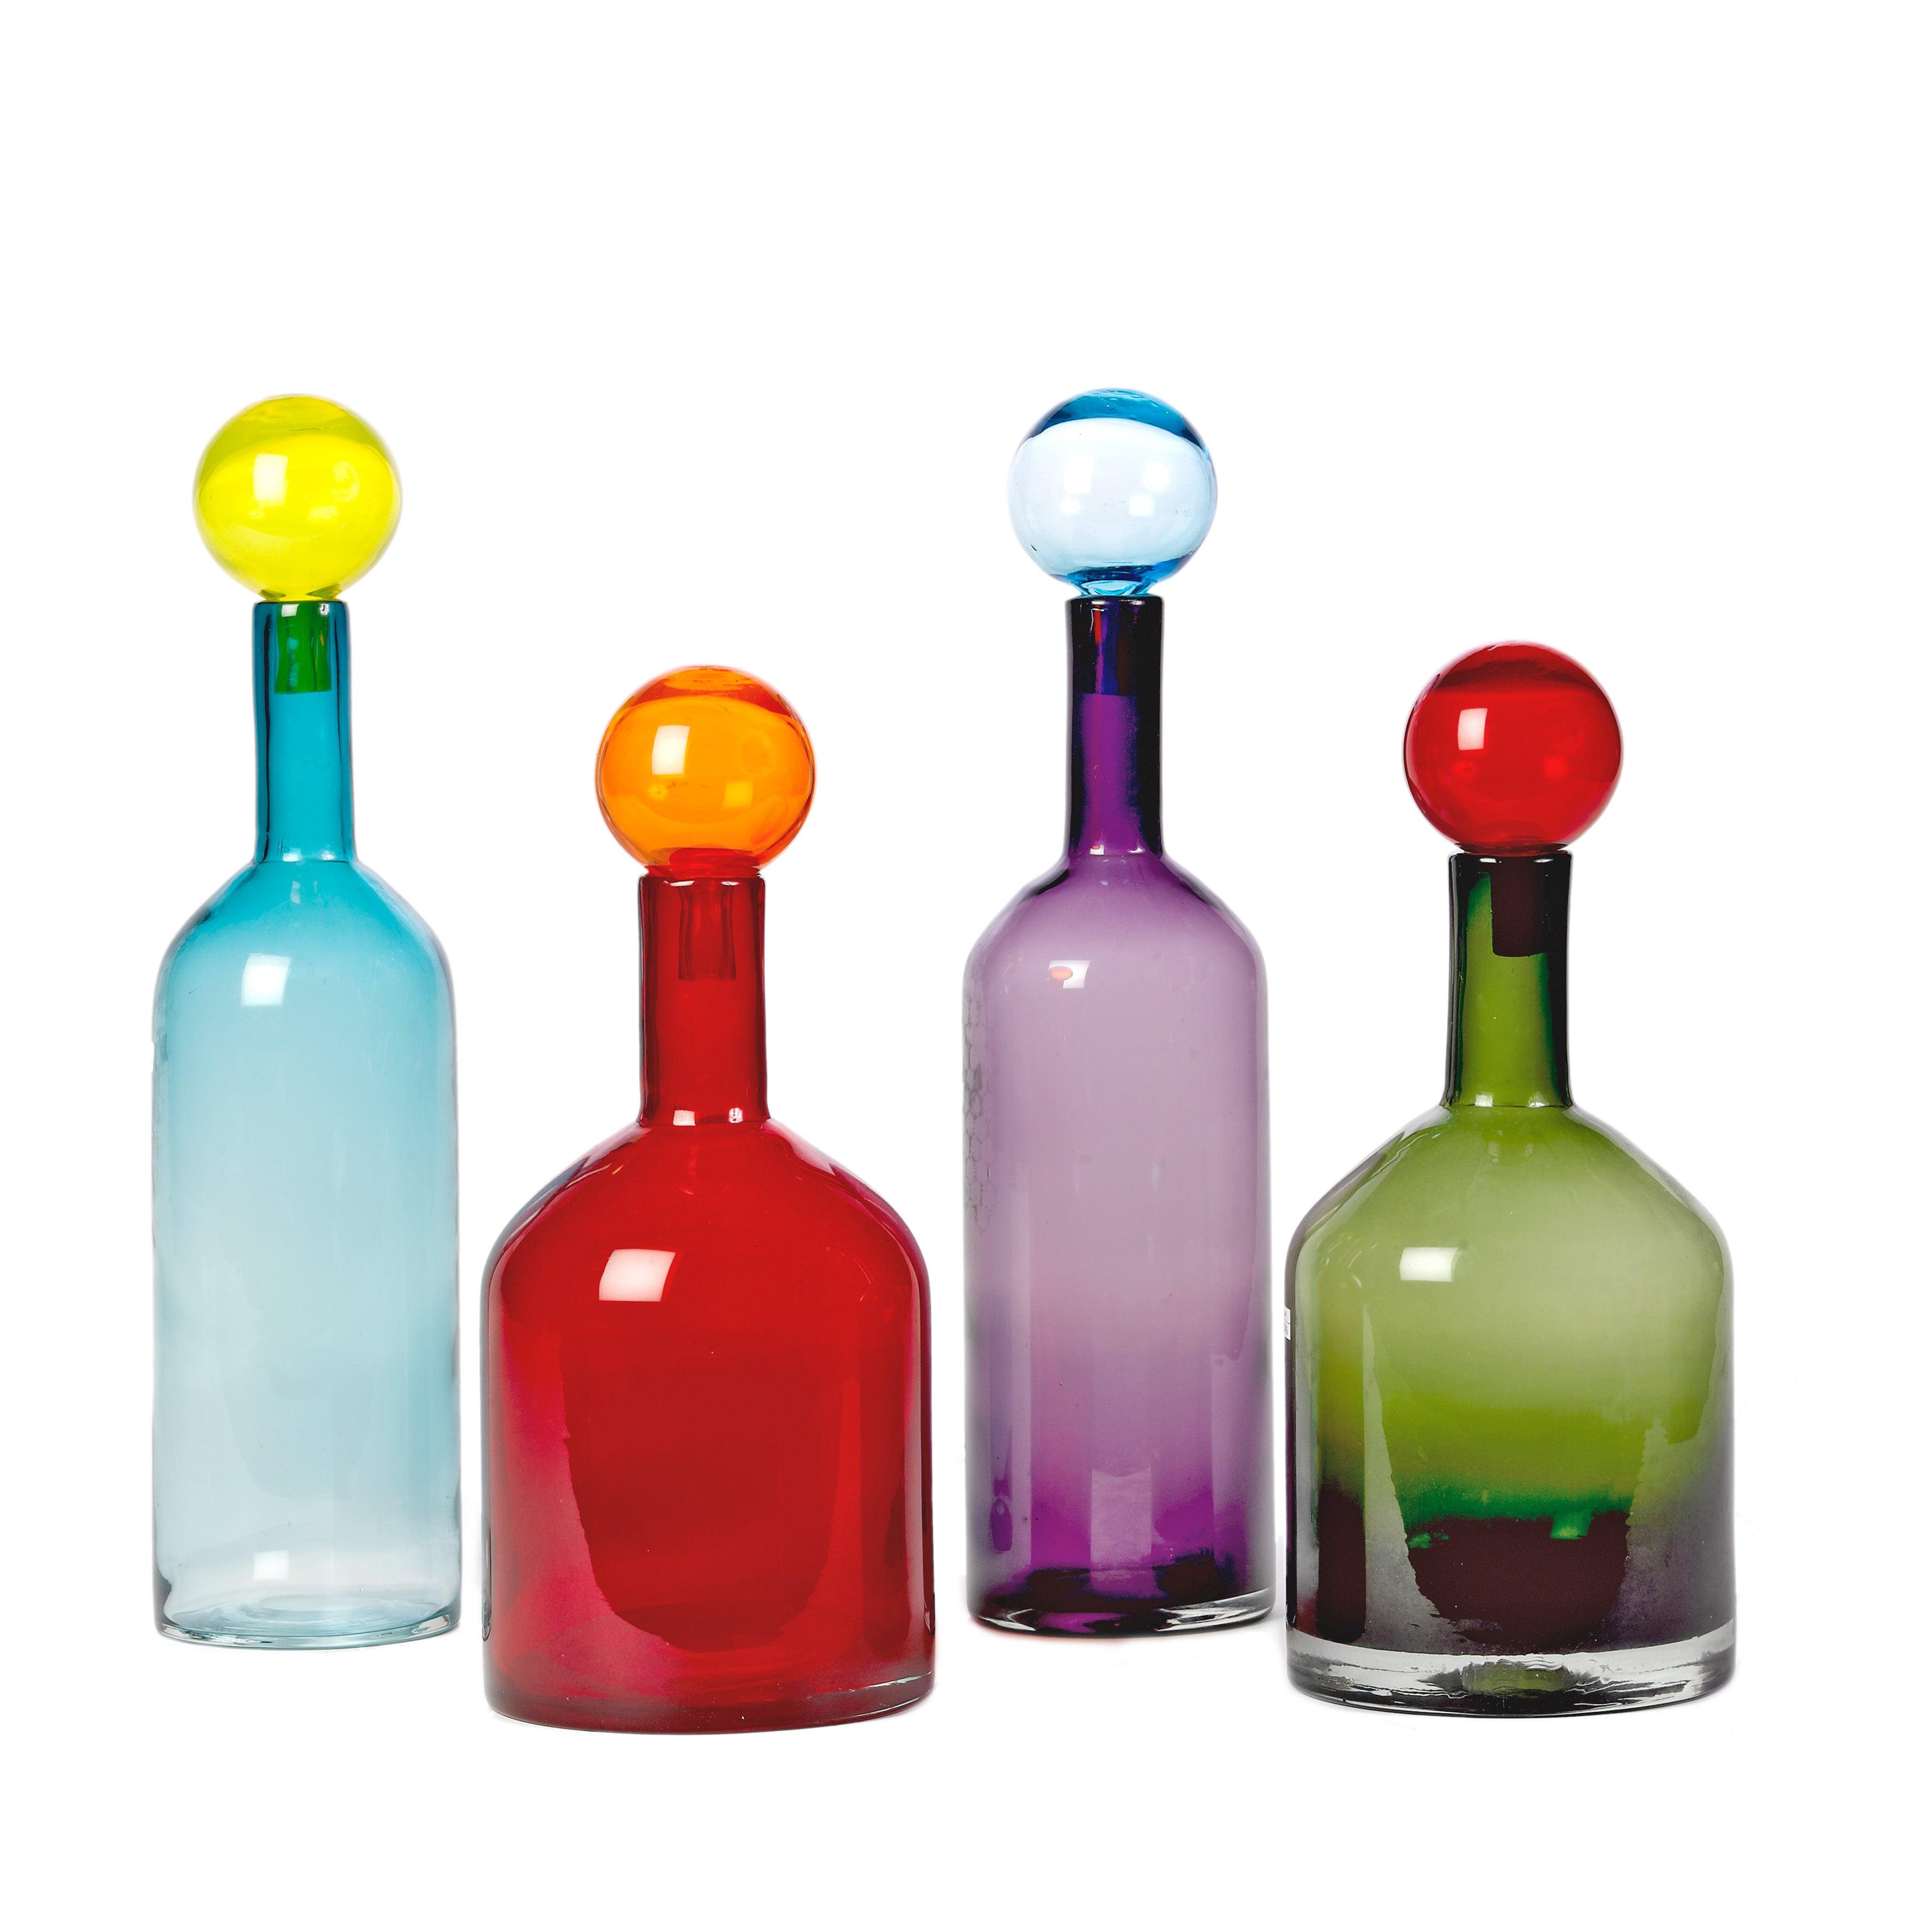 Zestaw butelek BUBBLES AND BOTTLES kolorowe szkło, Pols Potten, Eye on Design